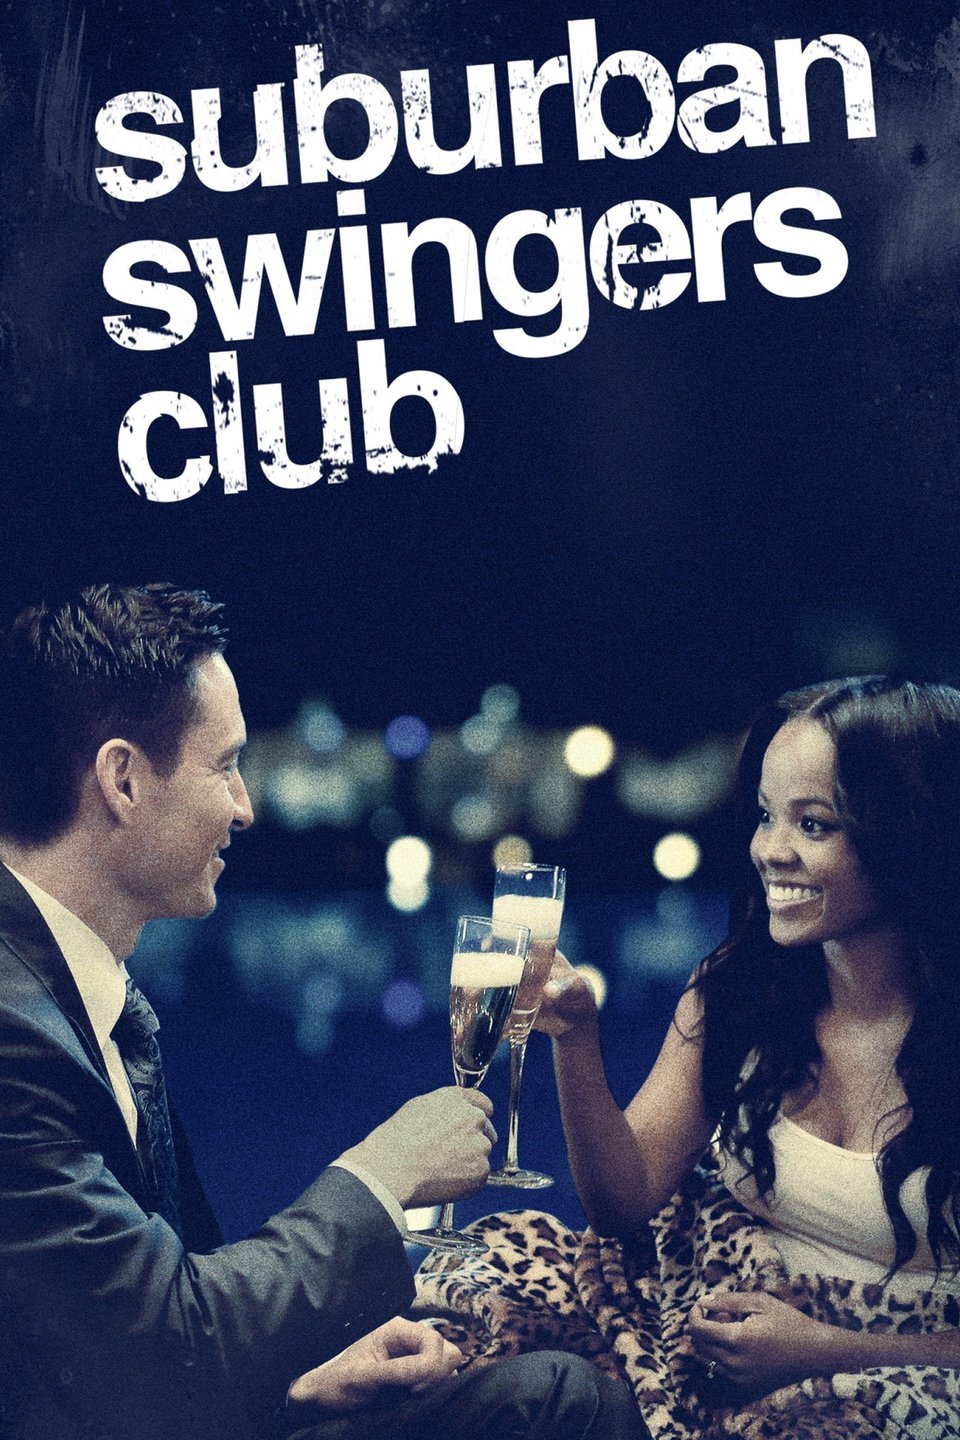 Suburban Swingers Club image